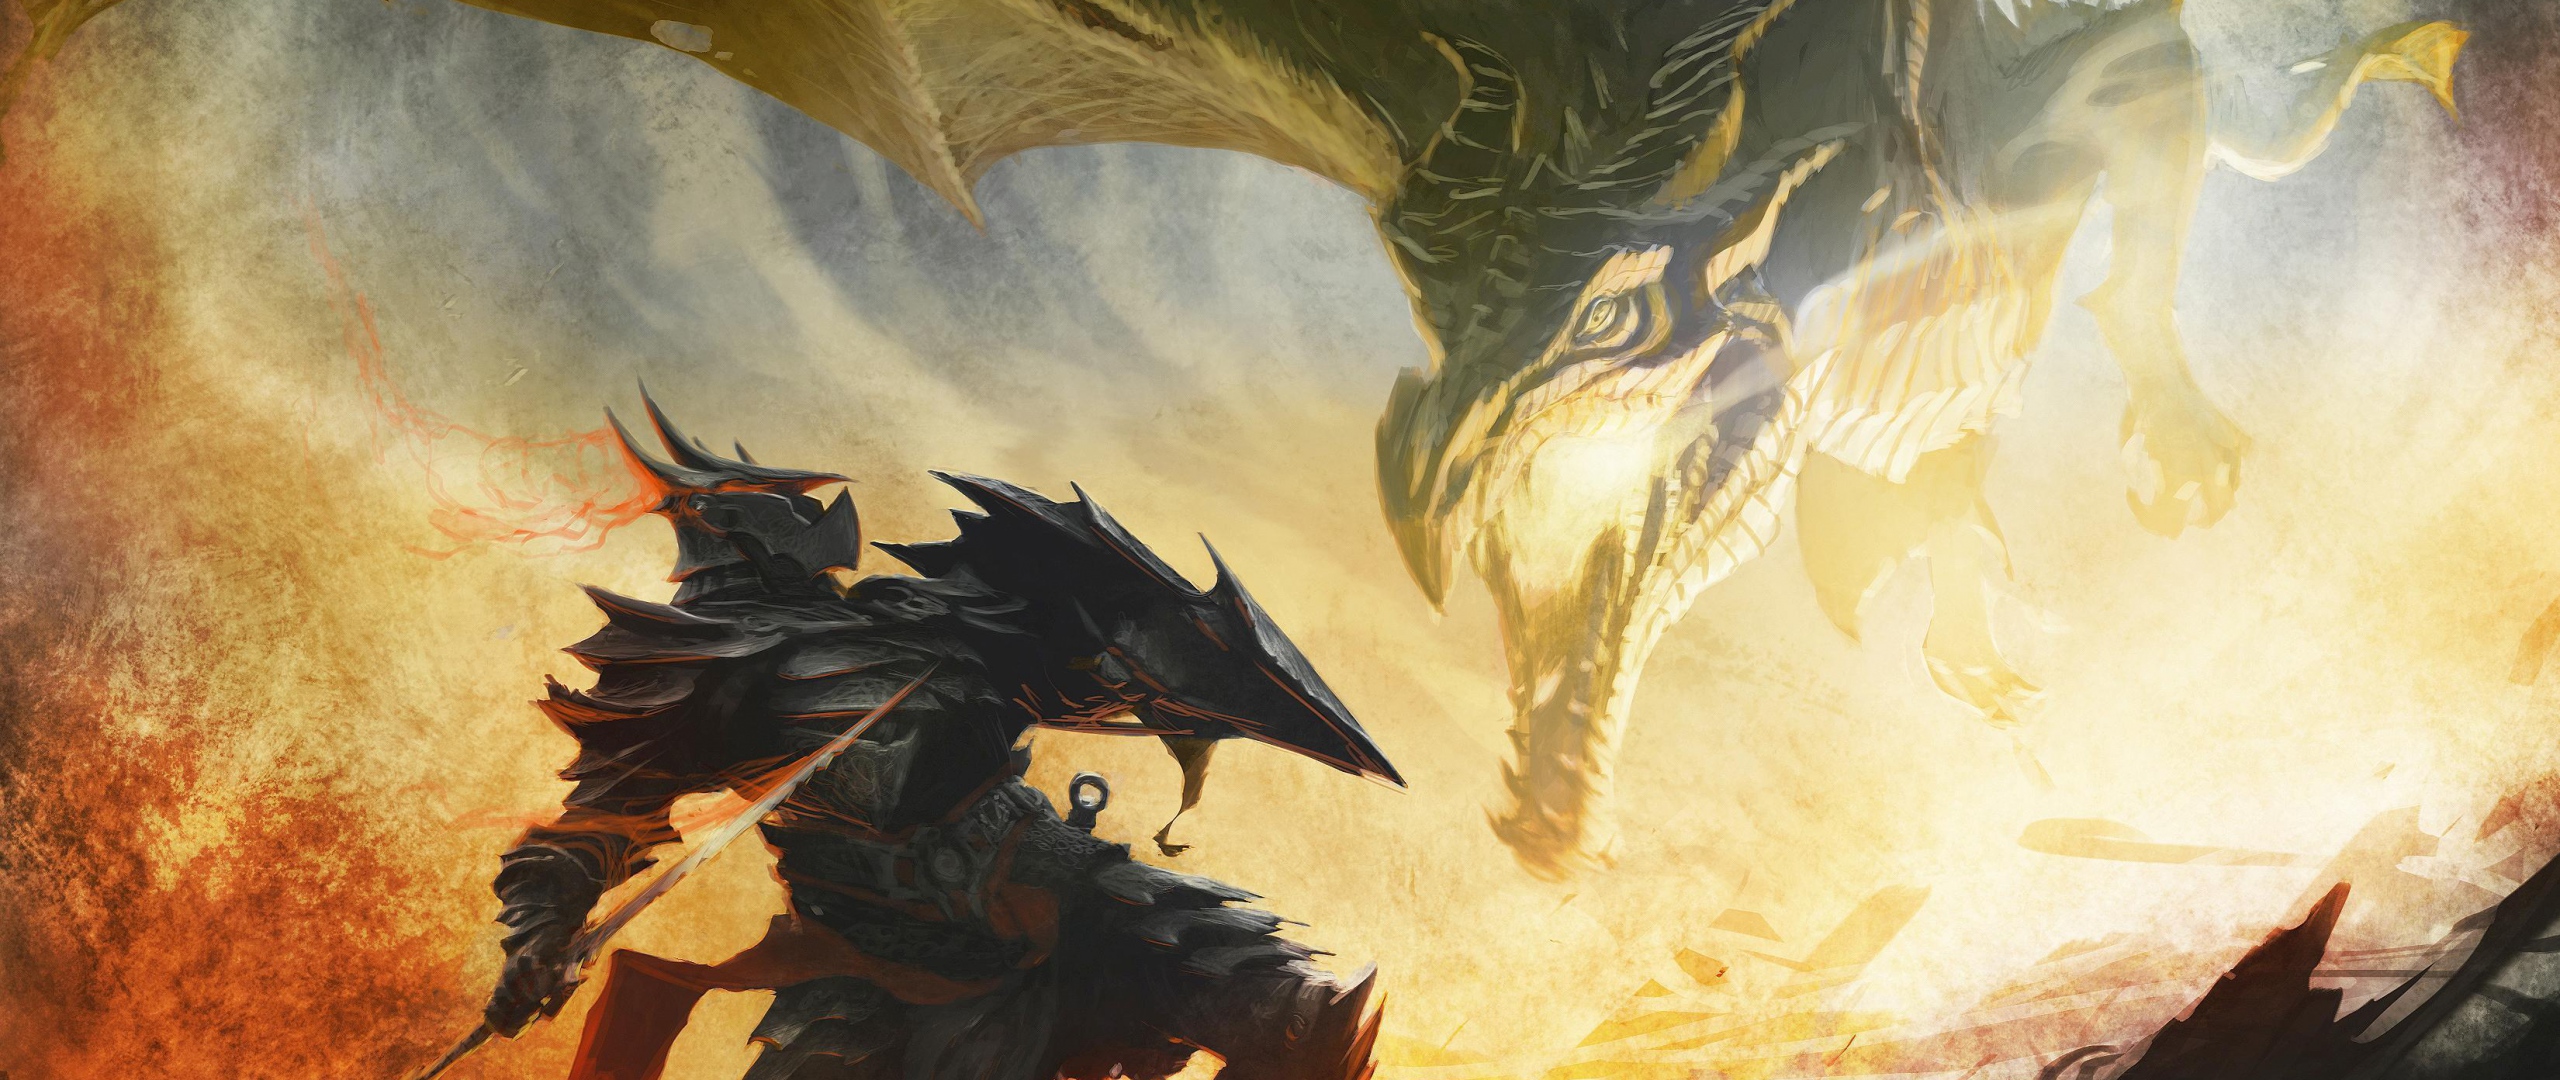 Wallpaper The Elder Scrolls Skyrim Art Dragon Daedric